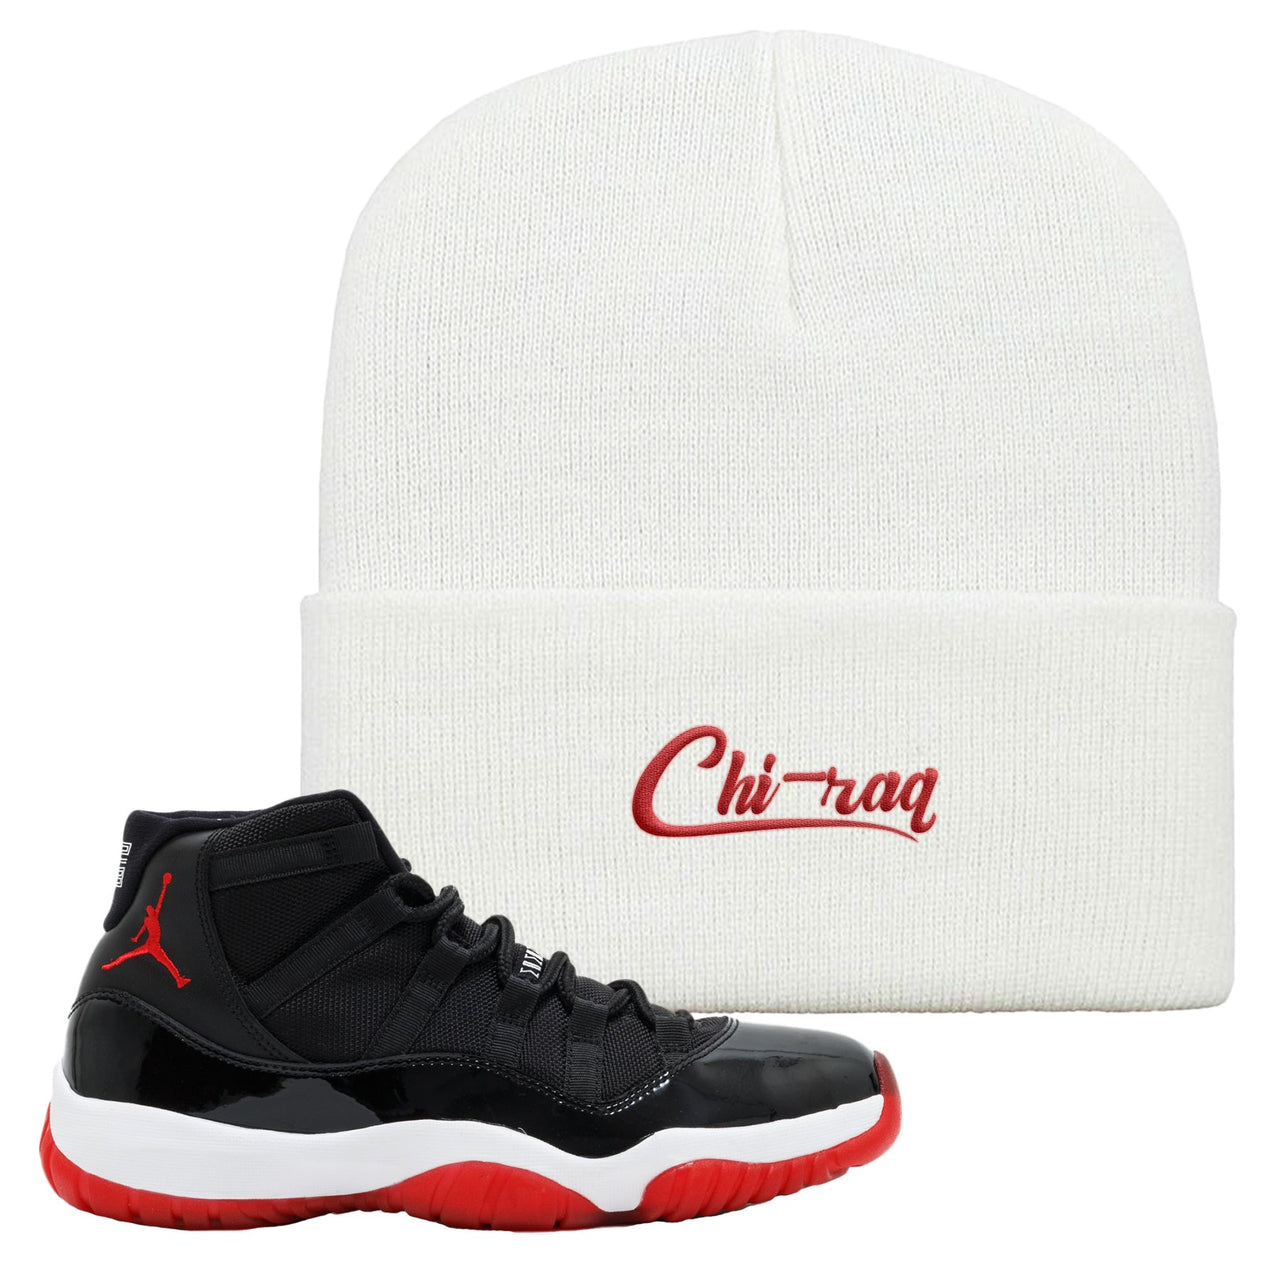 Jordan 11 Bred Chi-raq White Sneaker Hook Up Beanie